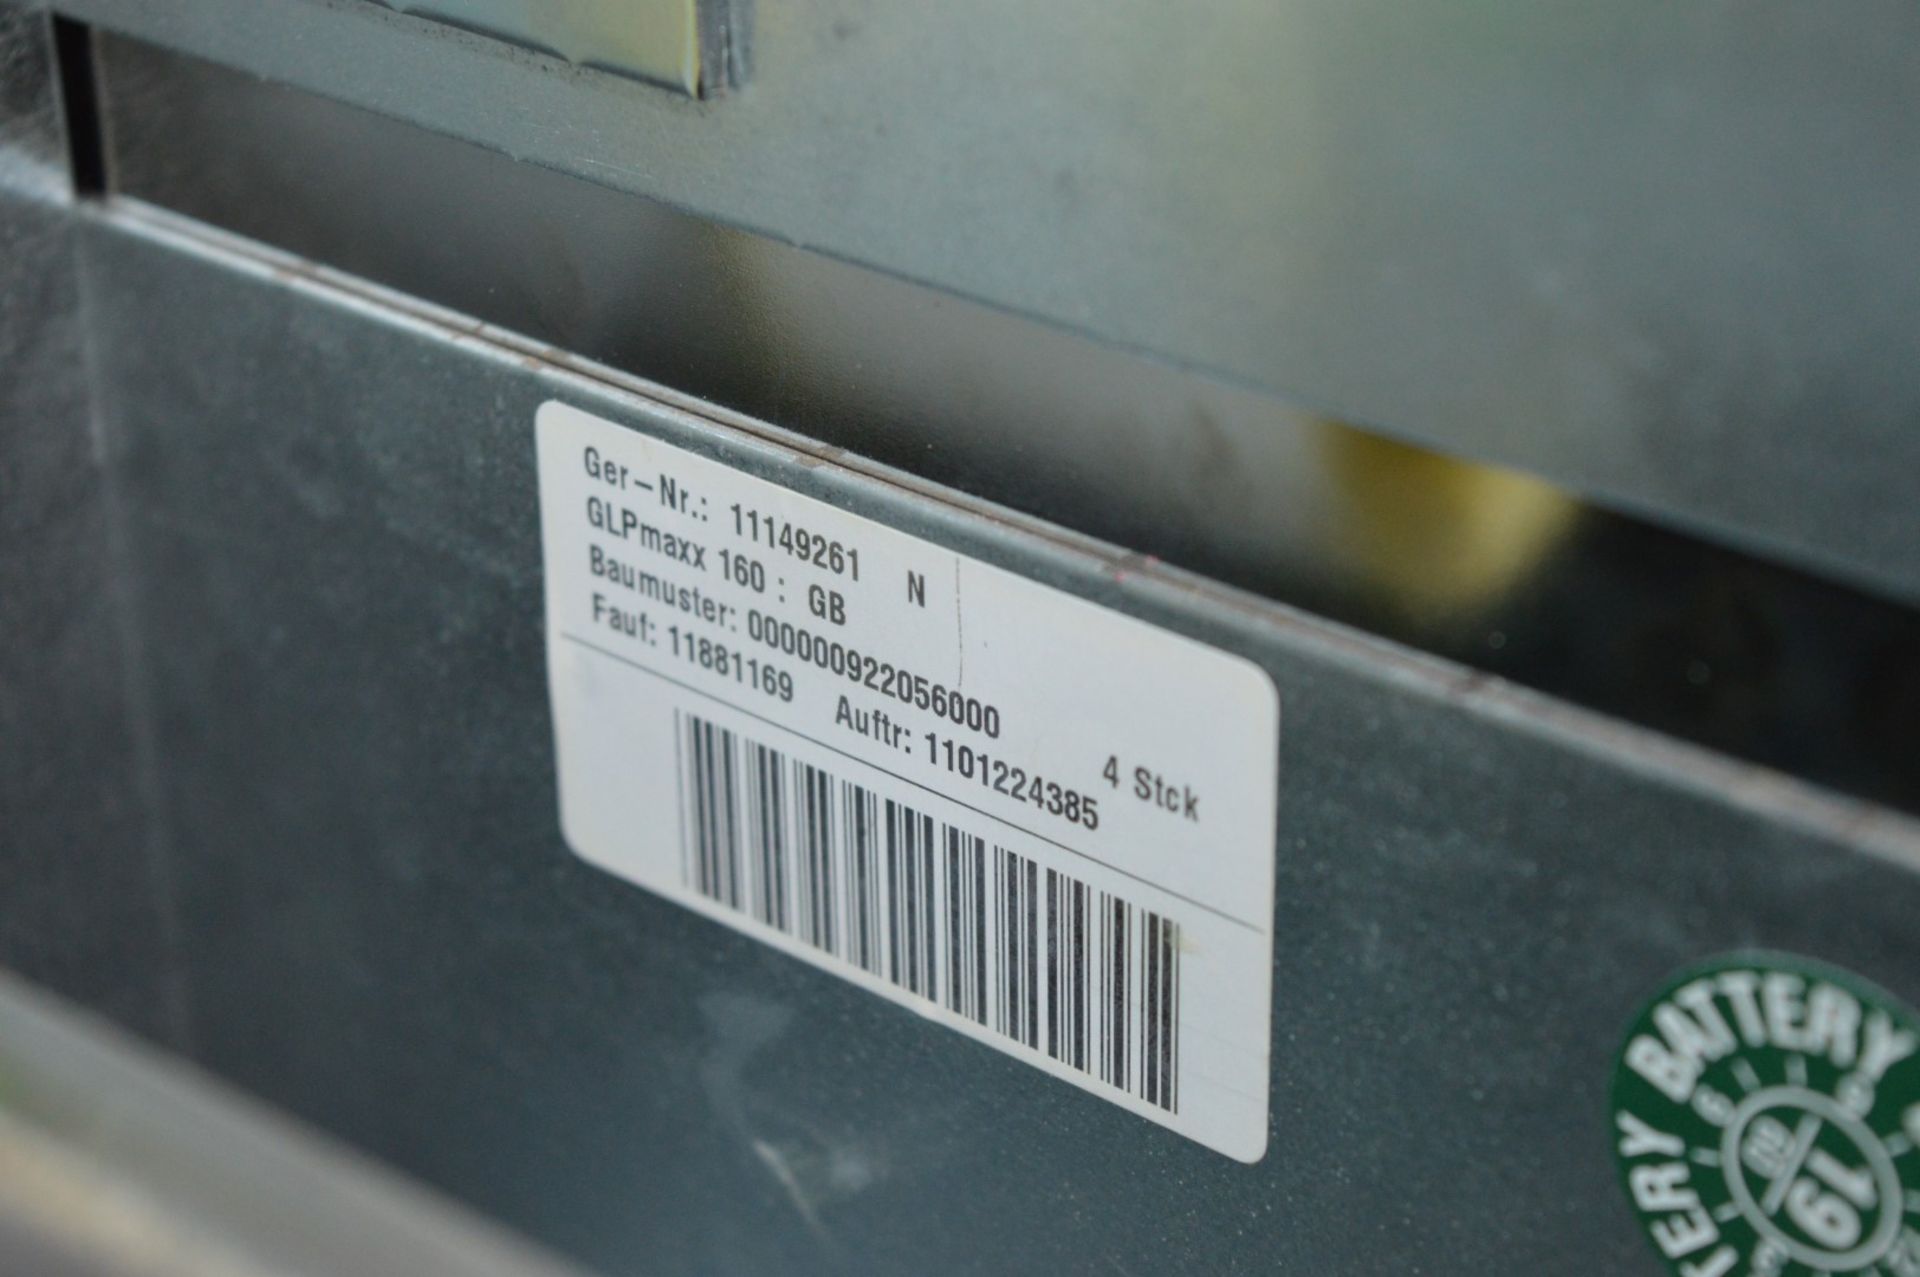 1 x Bizerba GLP Maxx Industrial Barcode Thermal Label Printer - Intel Atom Processor and 2gb Ram - - Image 2 of 13